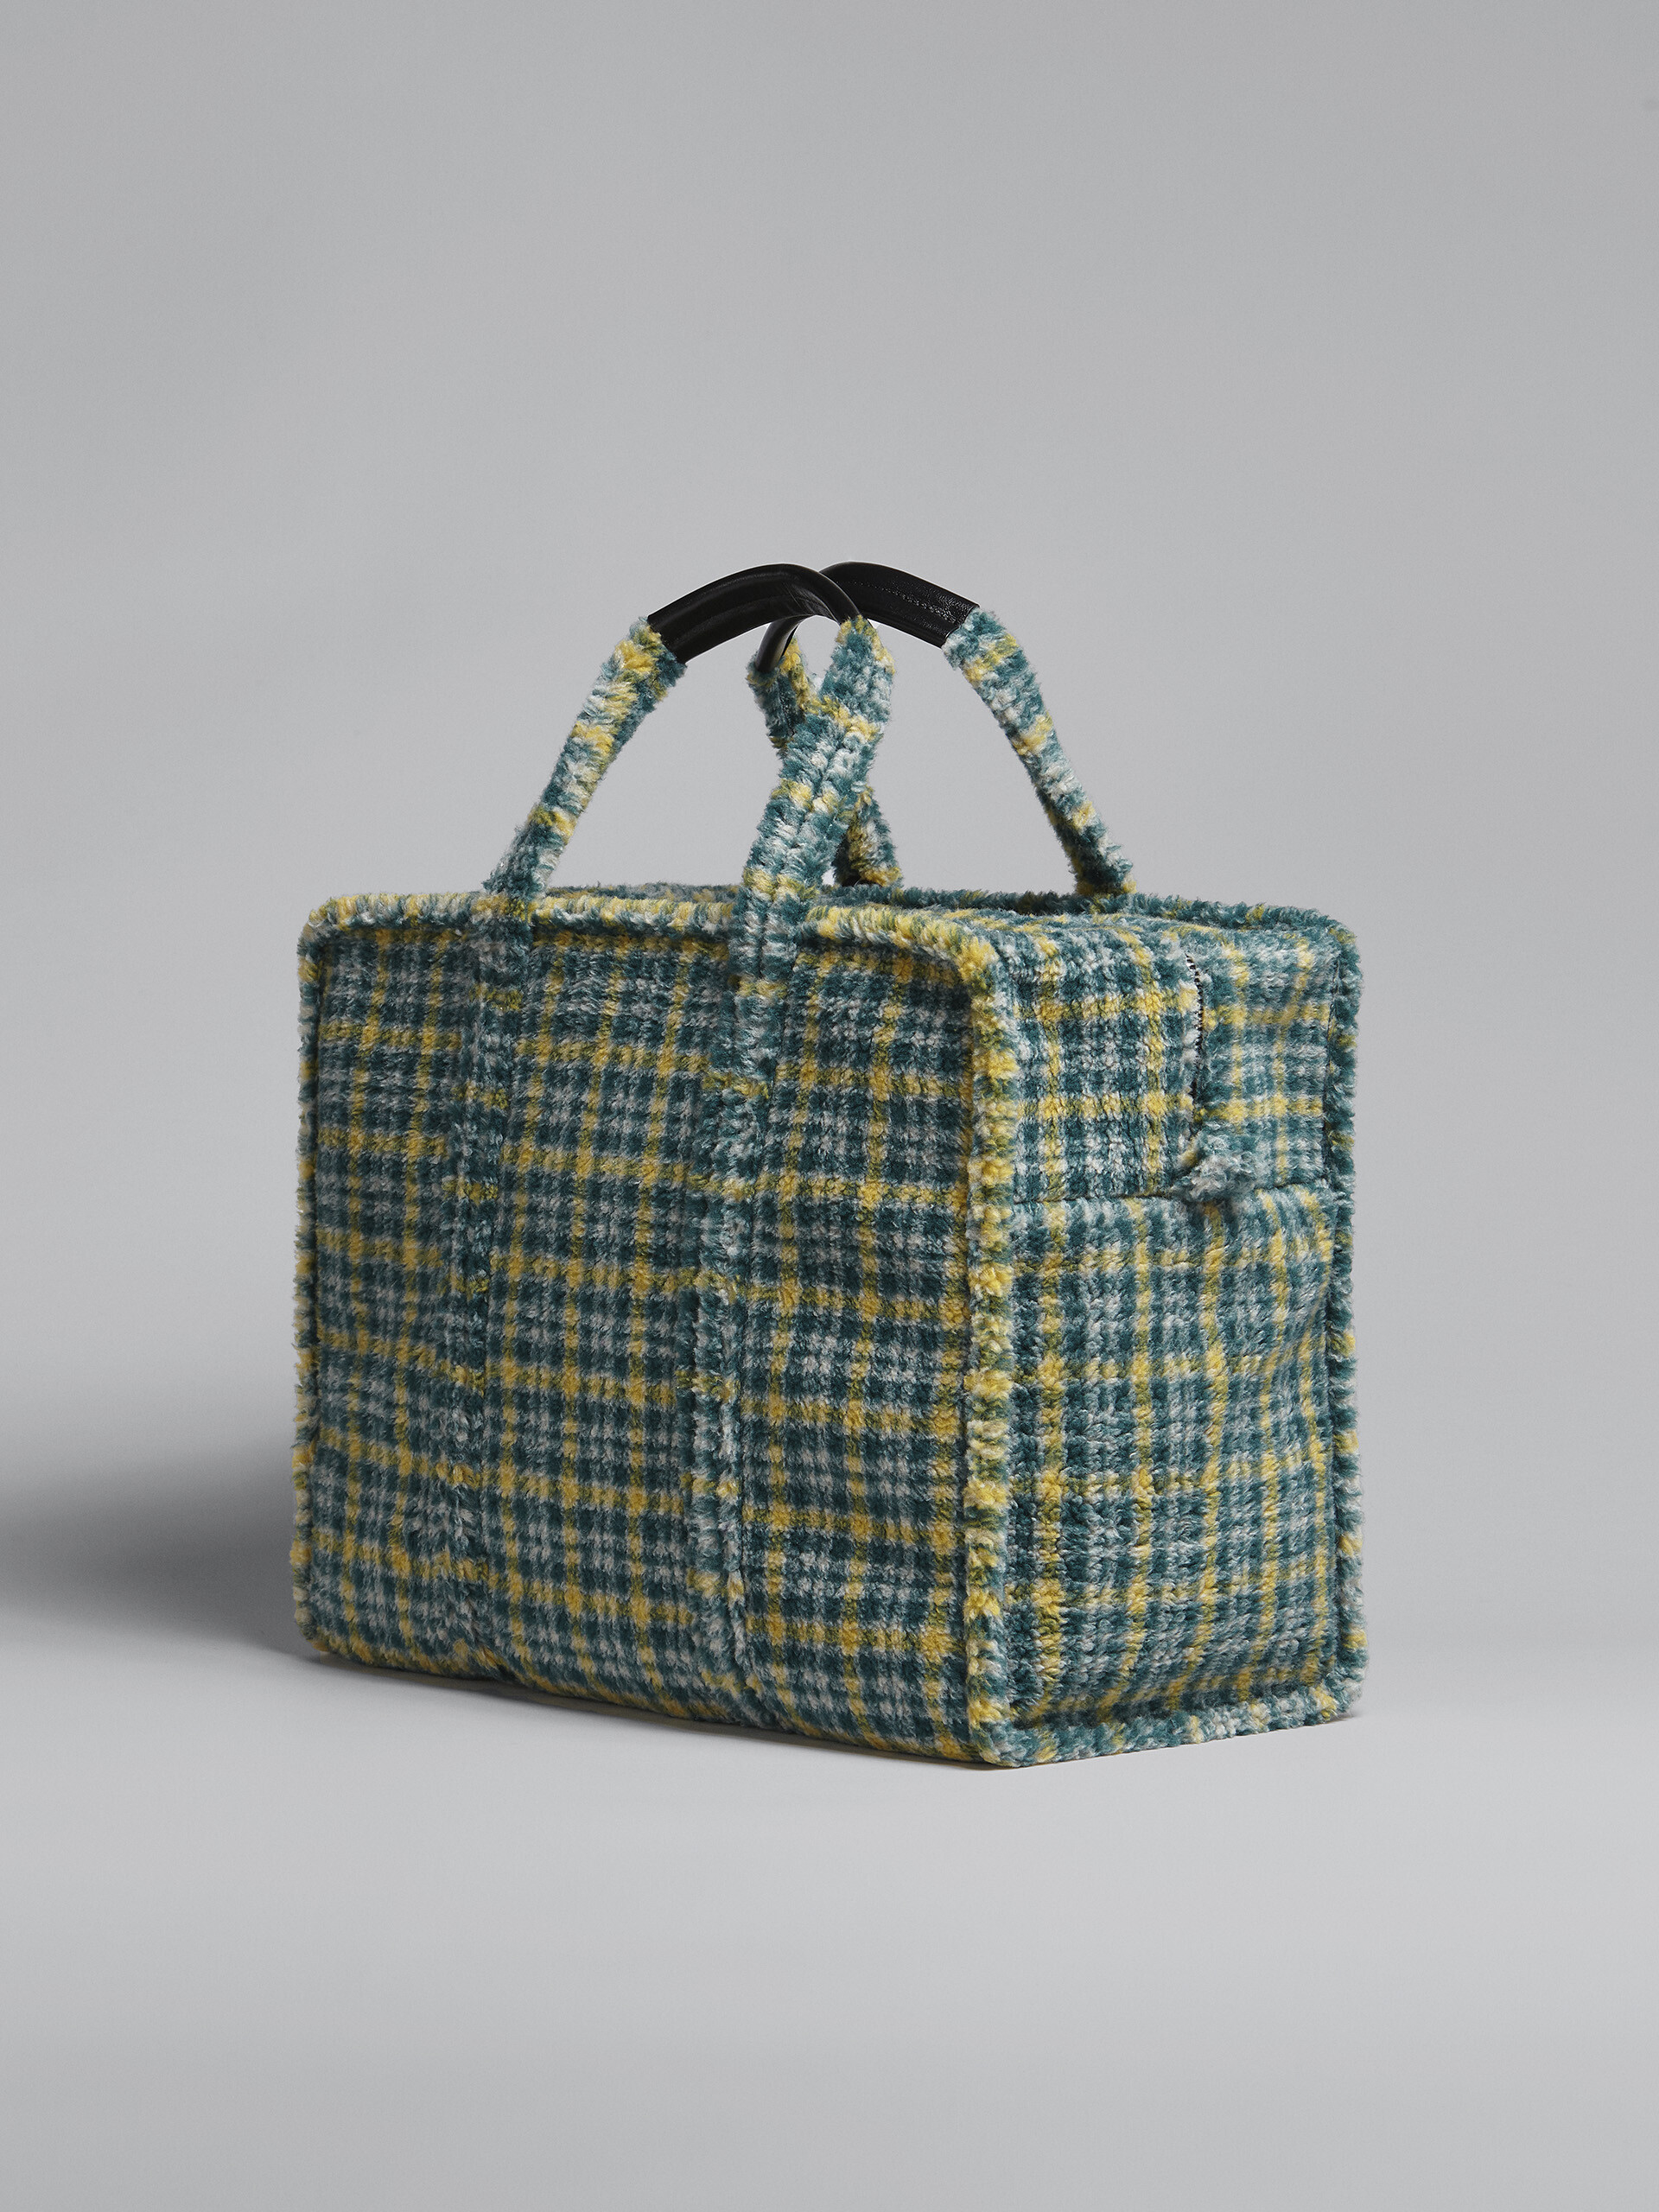 Travel bag in tessuto con motivo a riquadri verde - Borse shopping - Image 3